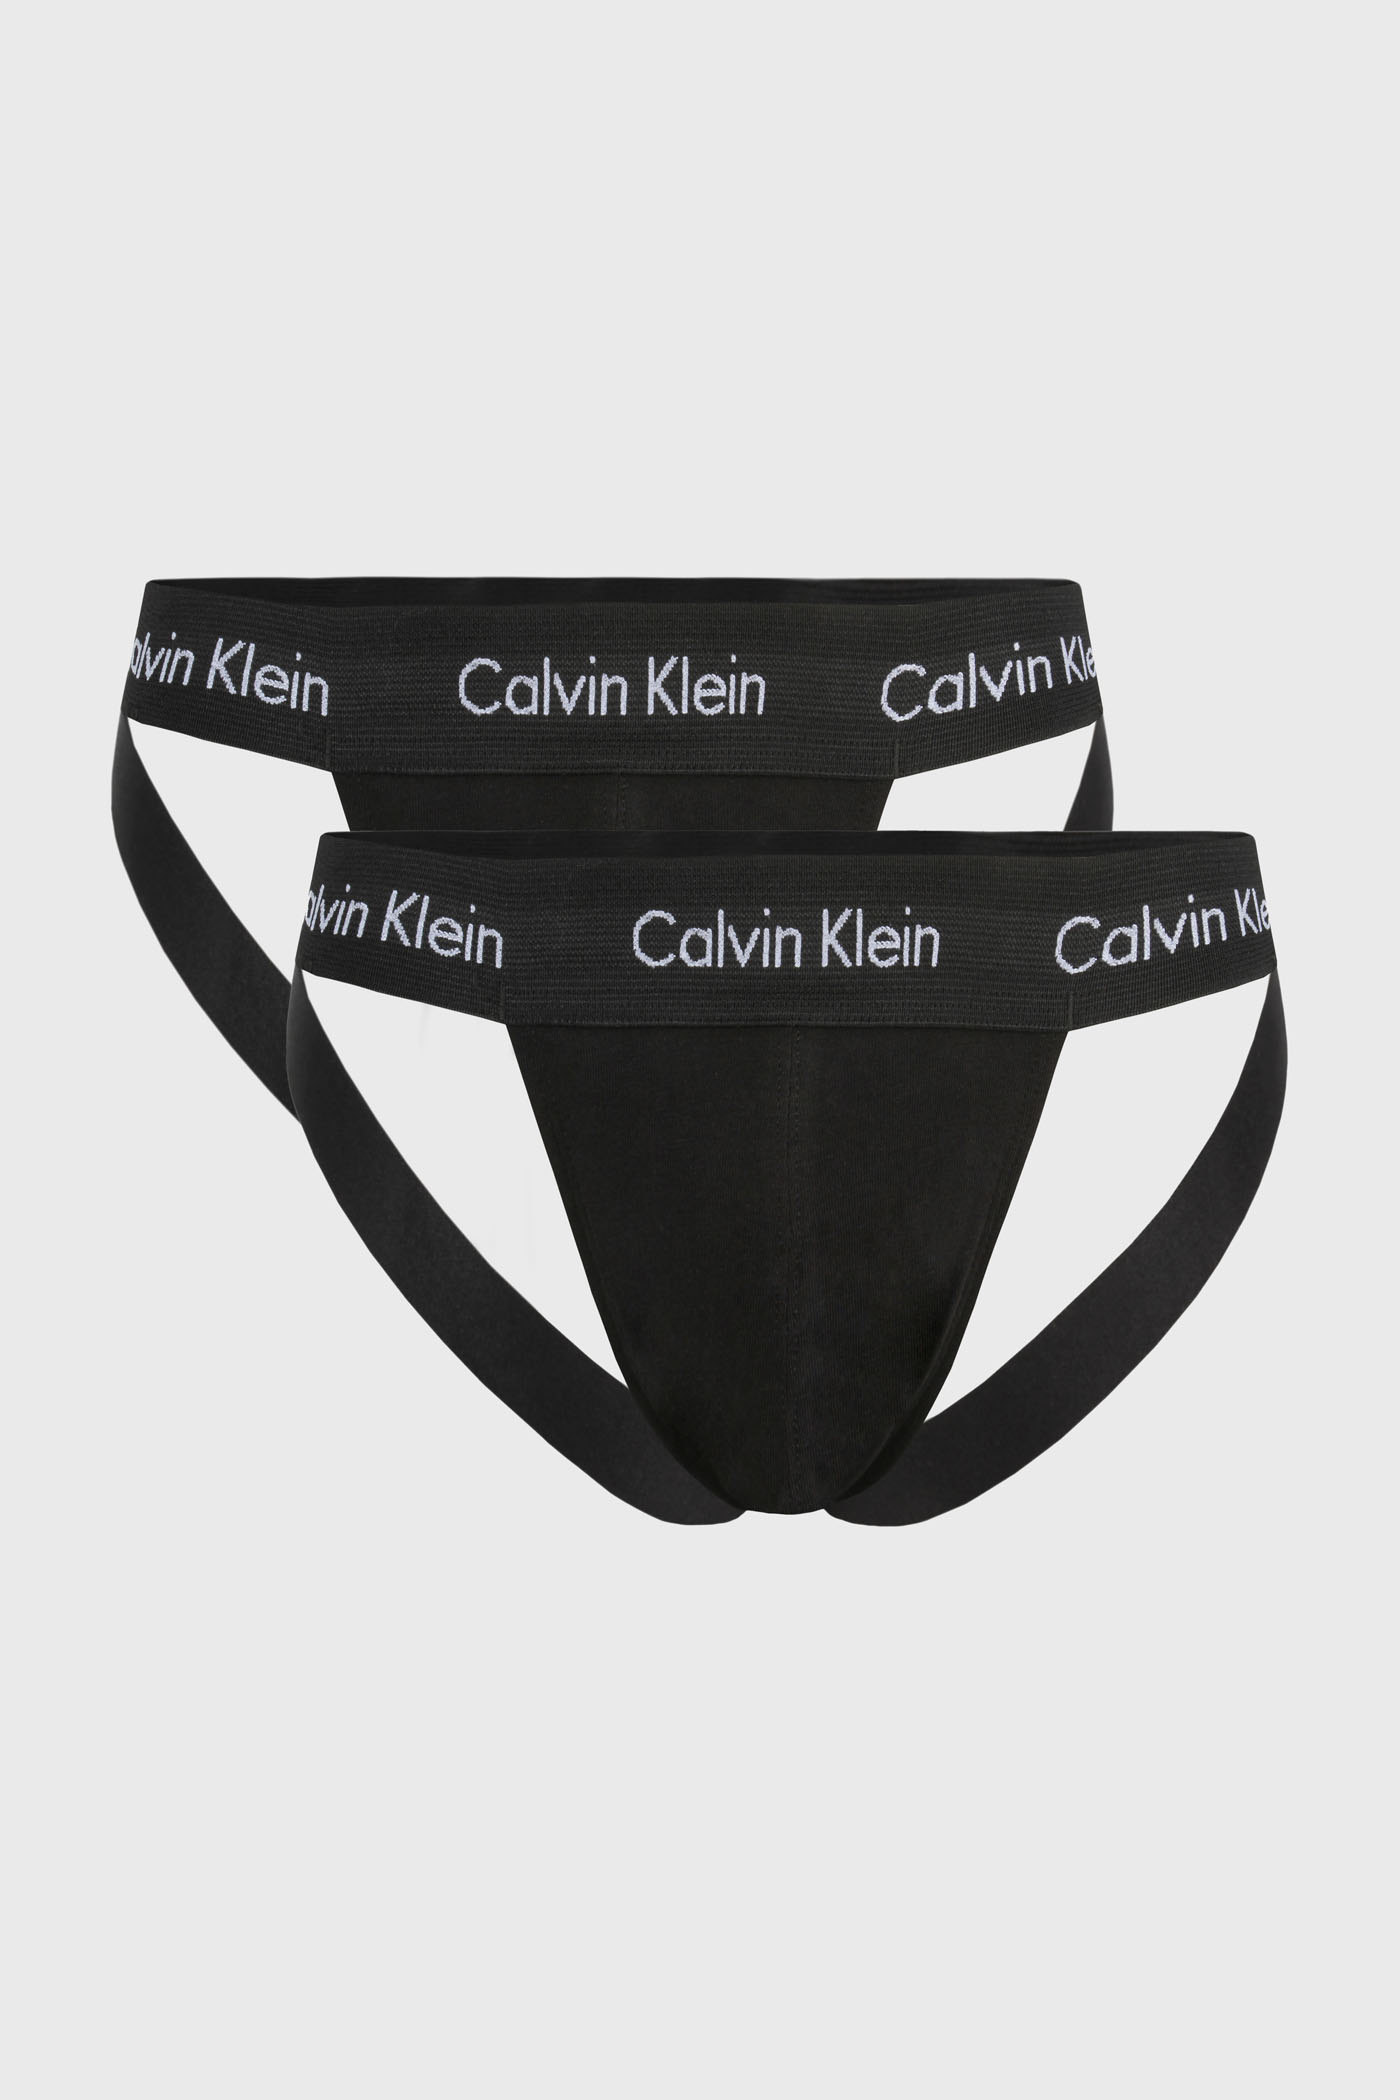 2PACK Jockstrap Calvin Klein Cotton stretch